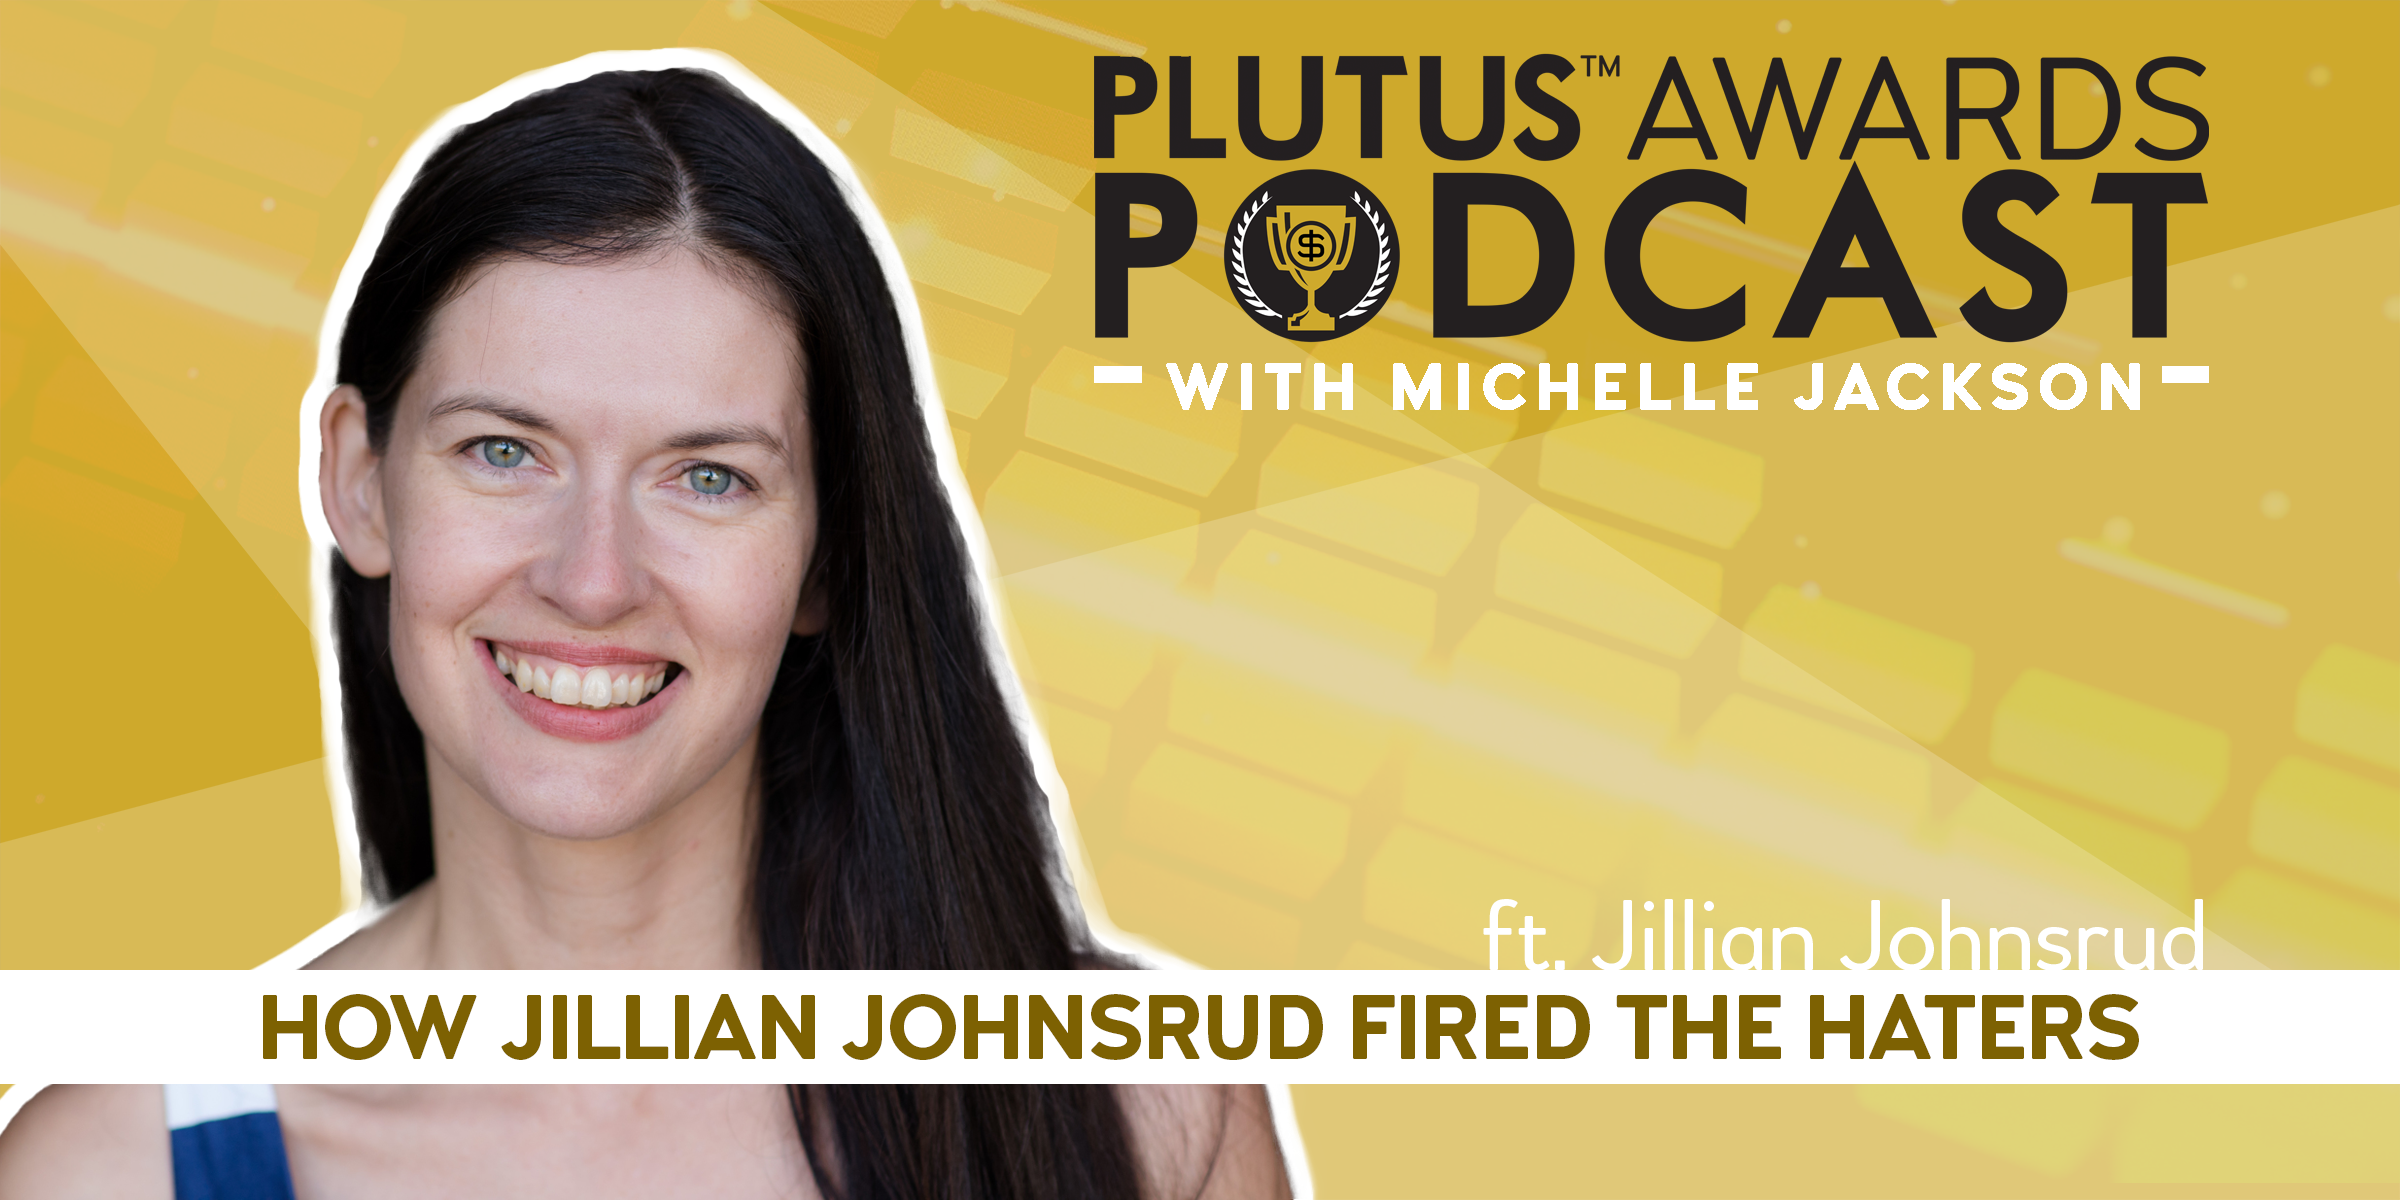 Plutus Awards Podcast - Jillian Johnsrud Cover